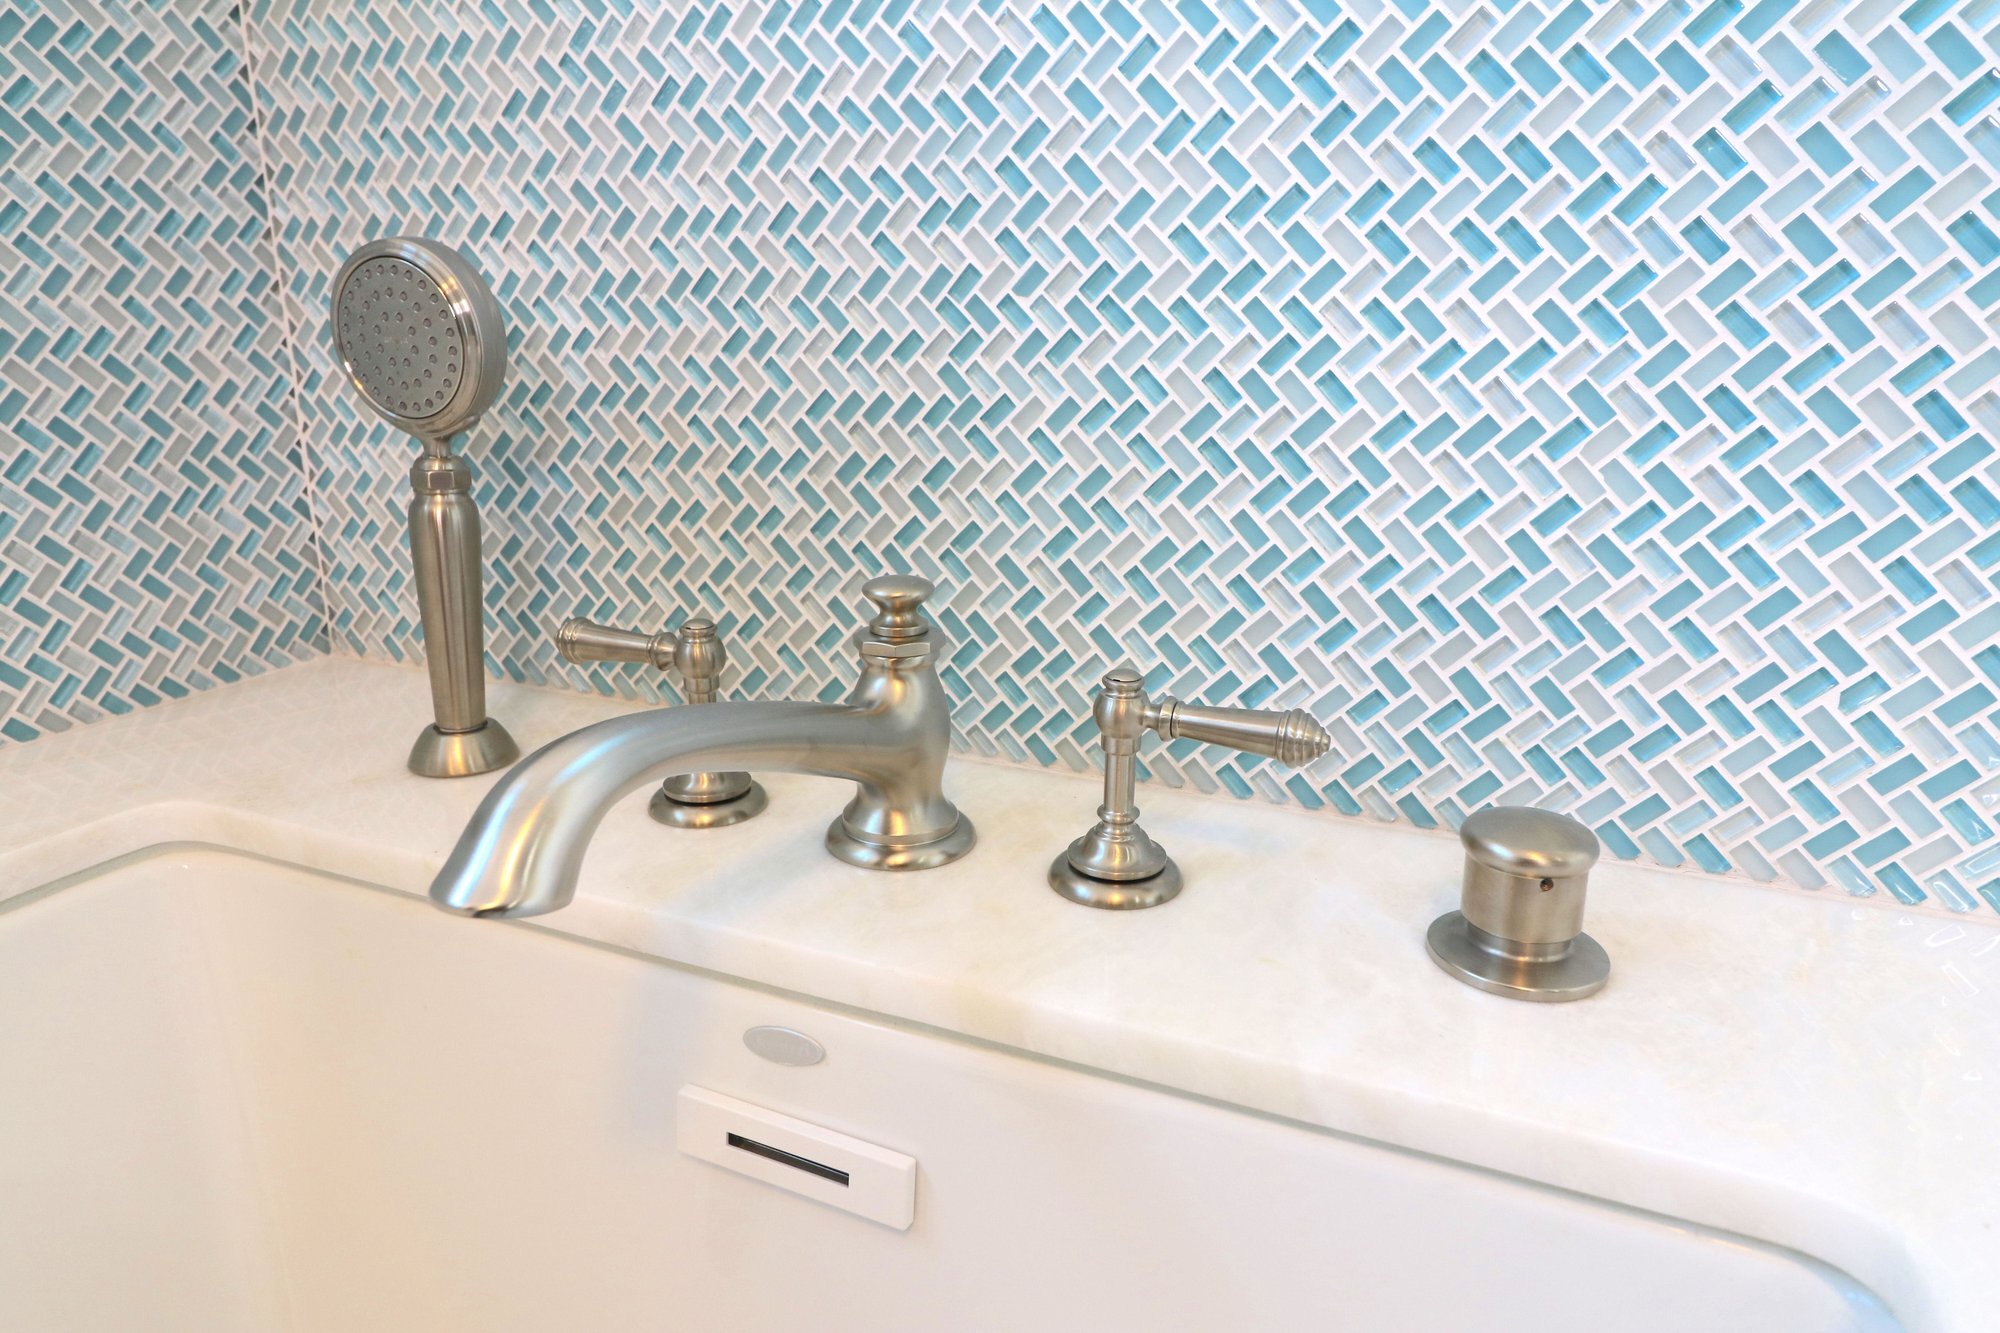 Kohler faucet filler -  Master bathroom remodel - best south bay - bay cities construction